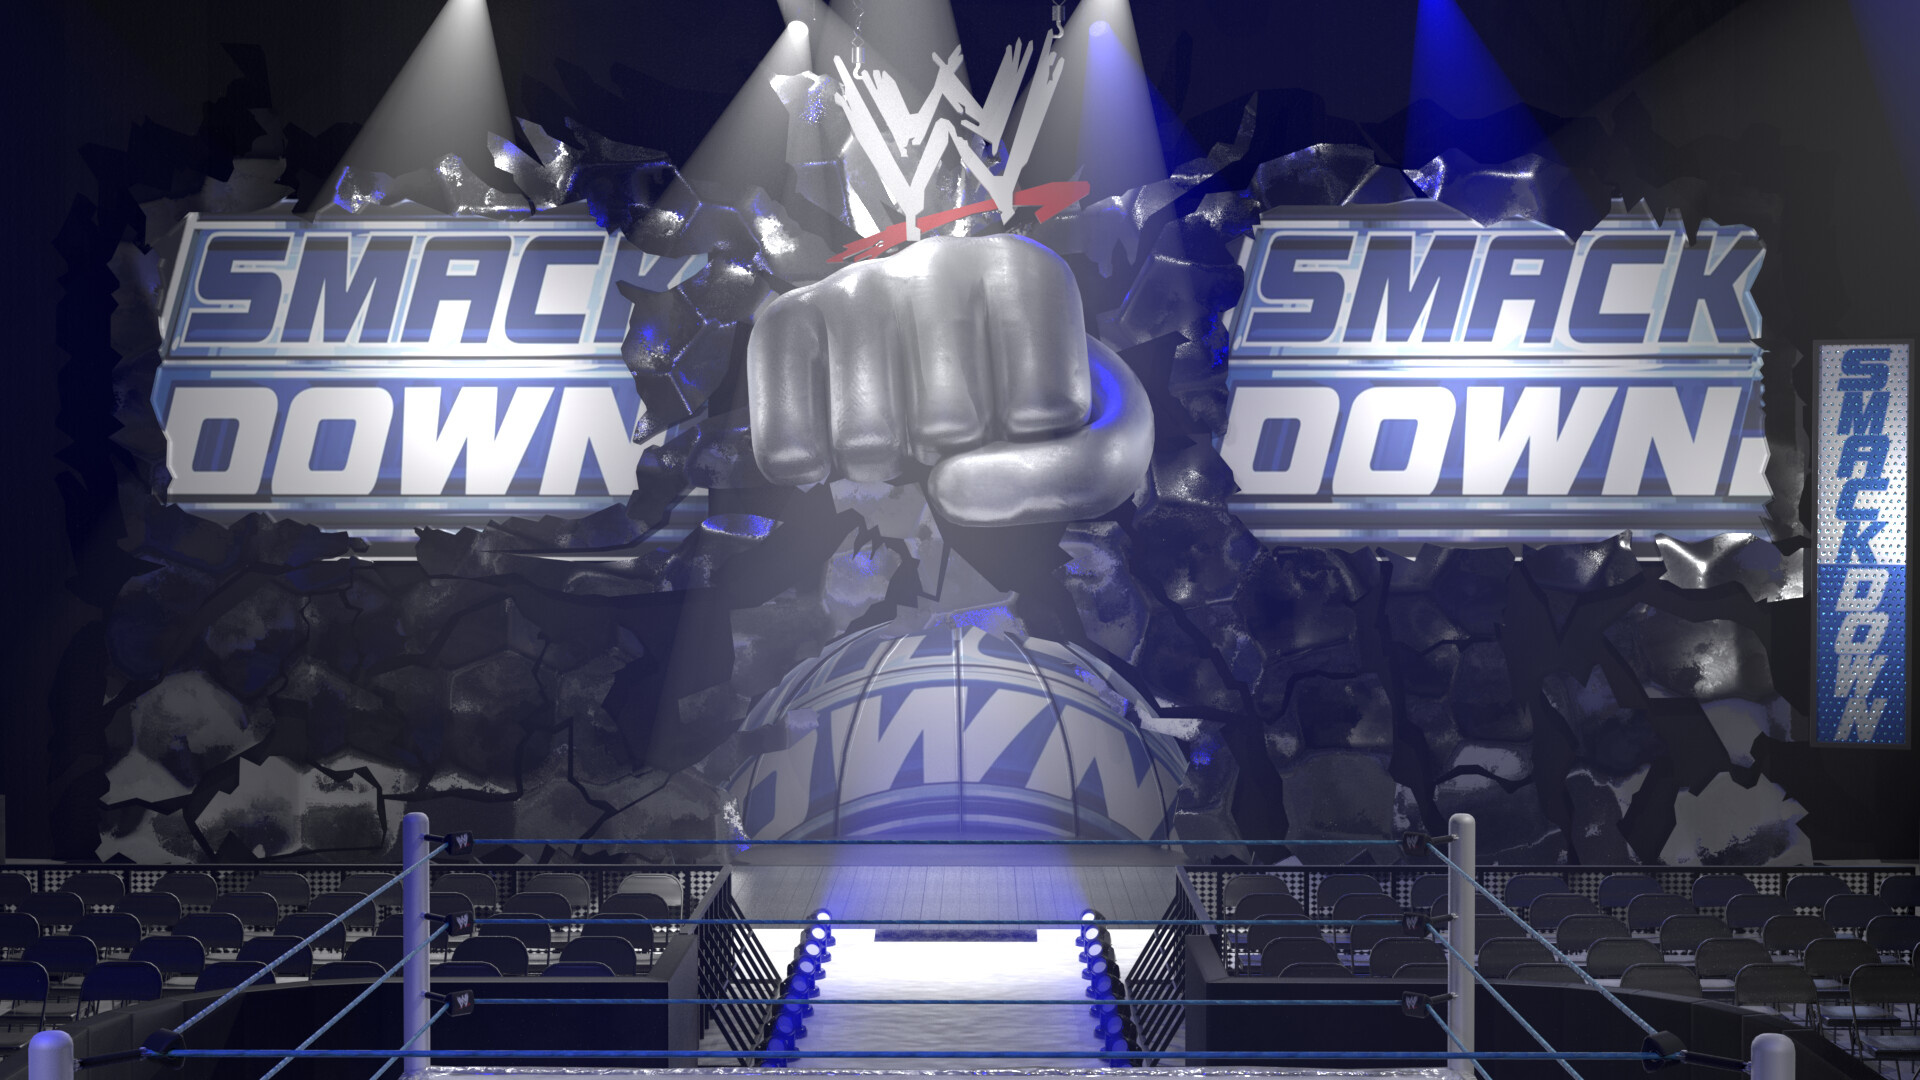 Vincent Haws creation, SmackDown arena, Early 2000s nostalgia, Wrestling history, 1920x1080 Full HD Desktop